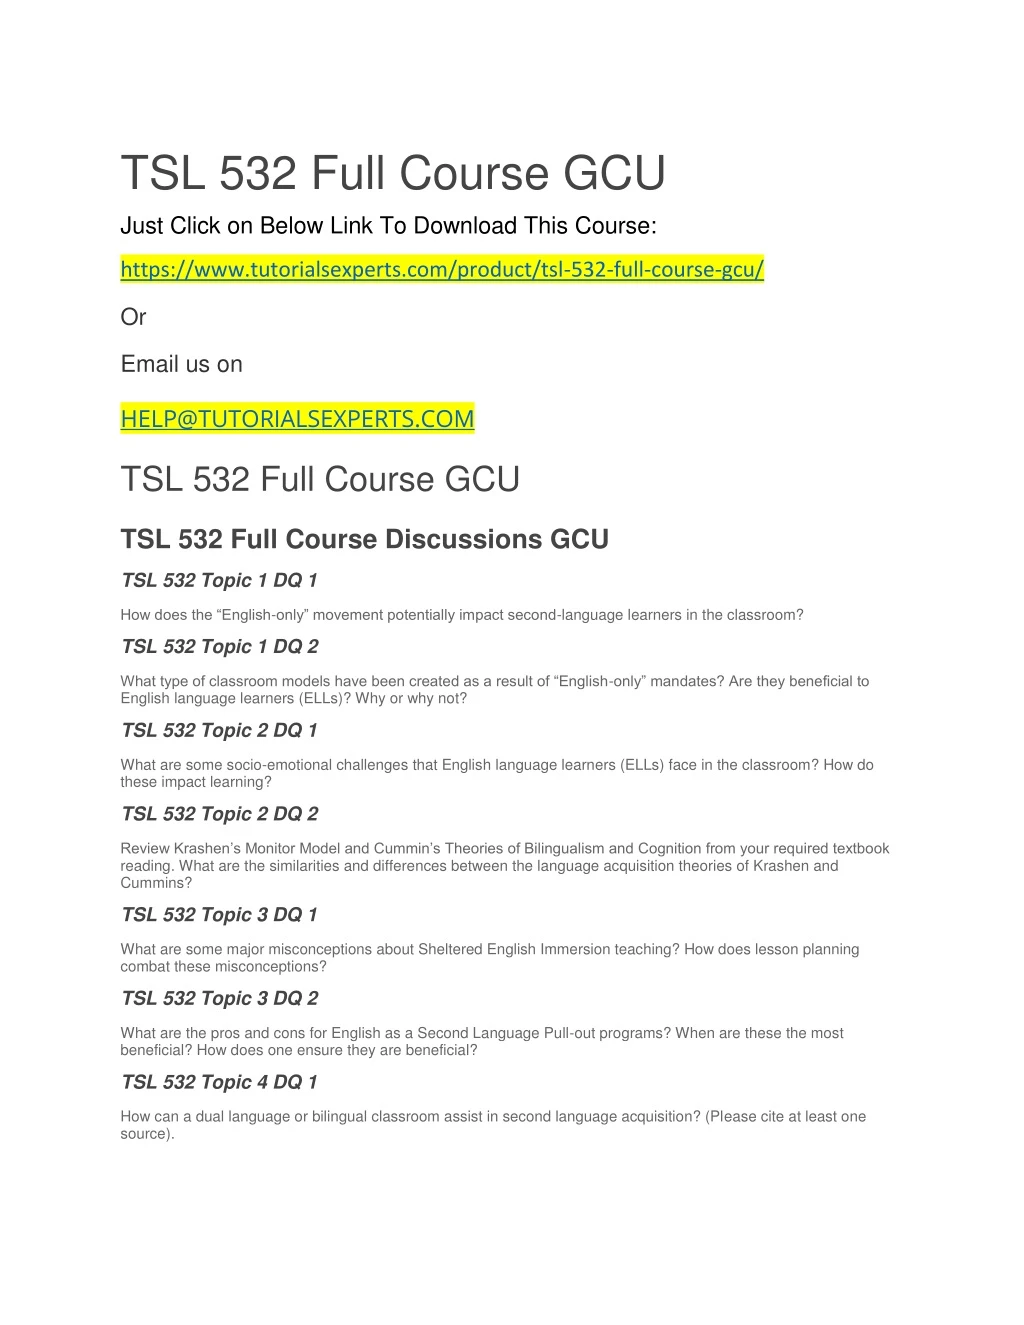 tsl 532 full course gcu just click on below link